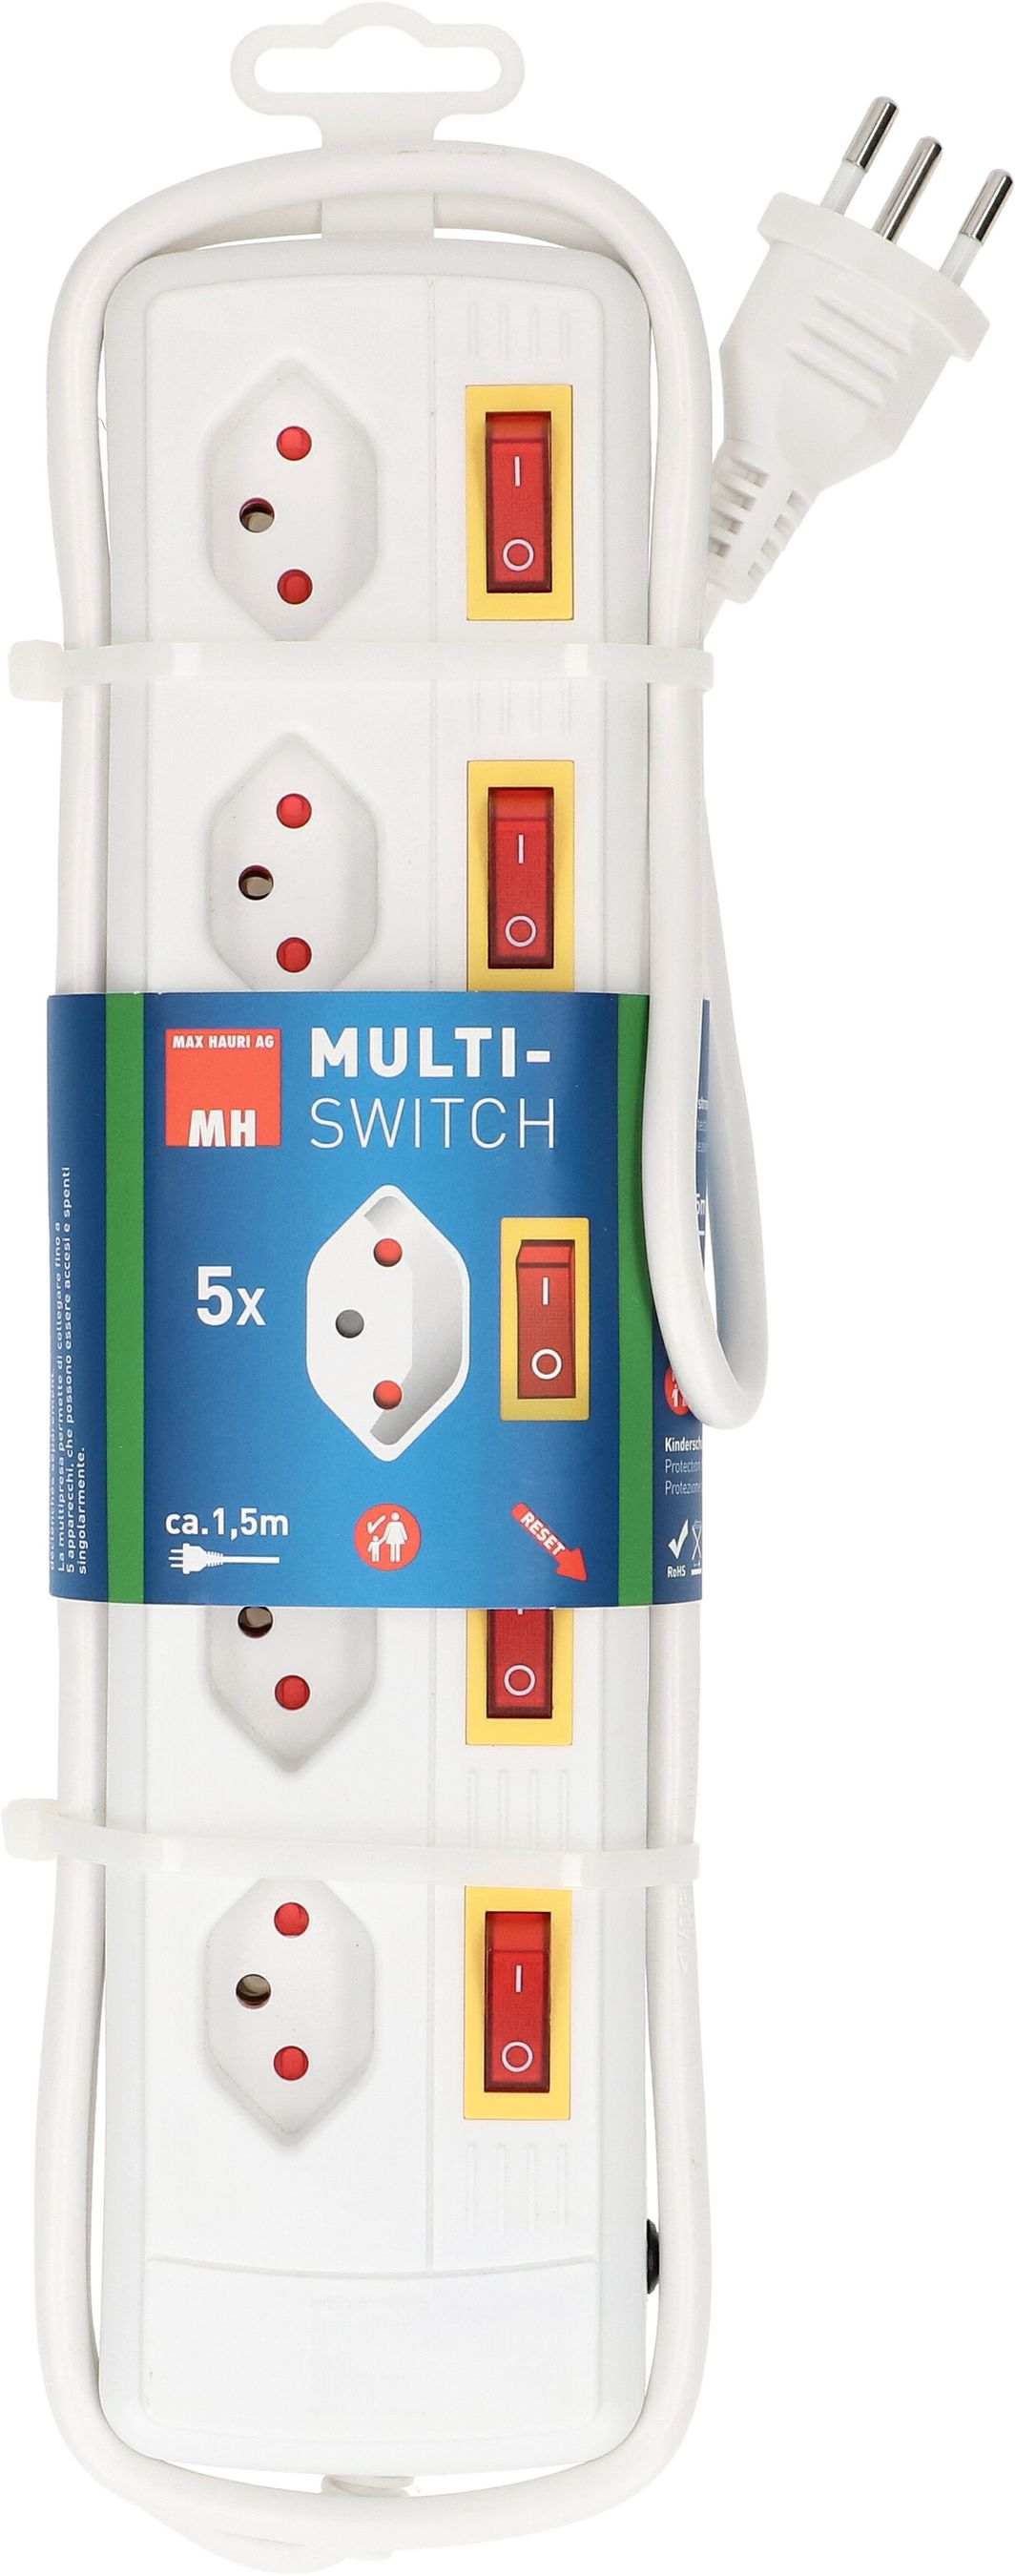 multipresa Multi-Switch 5x tipo 13 BS bianco interruttore 1.5m